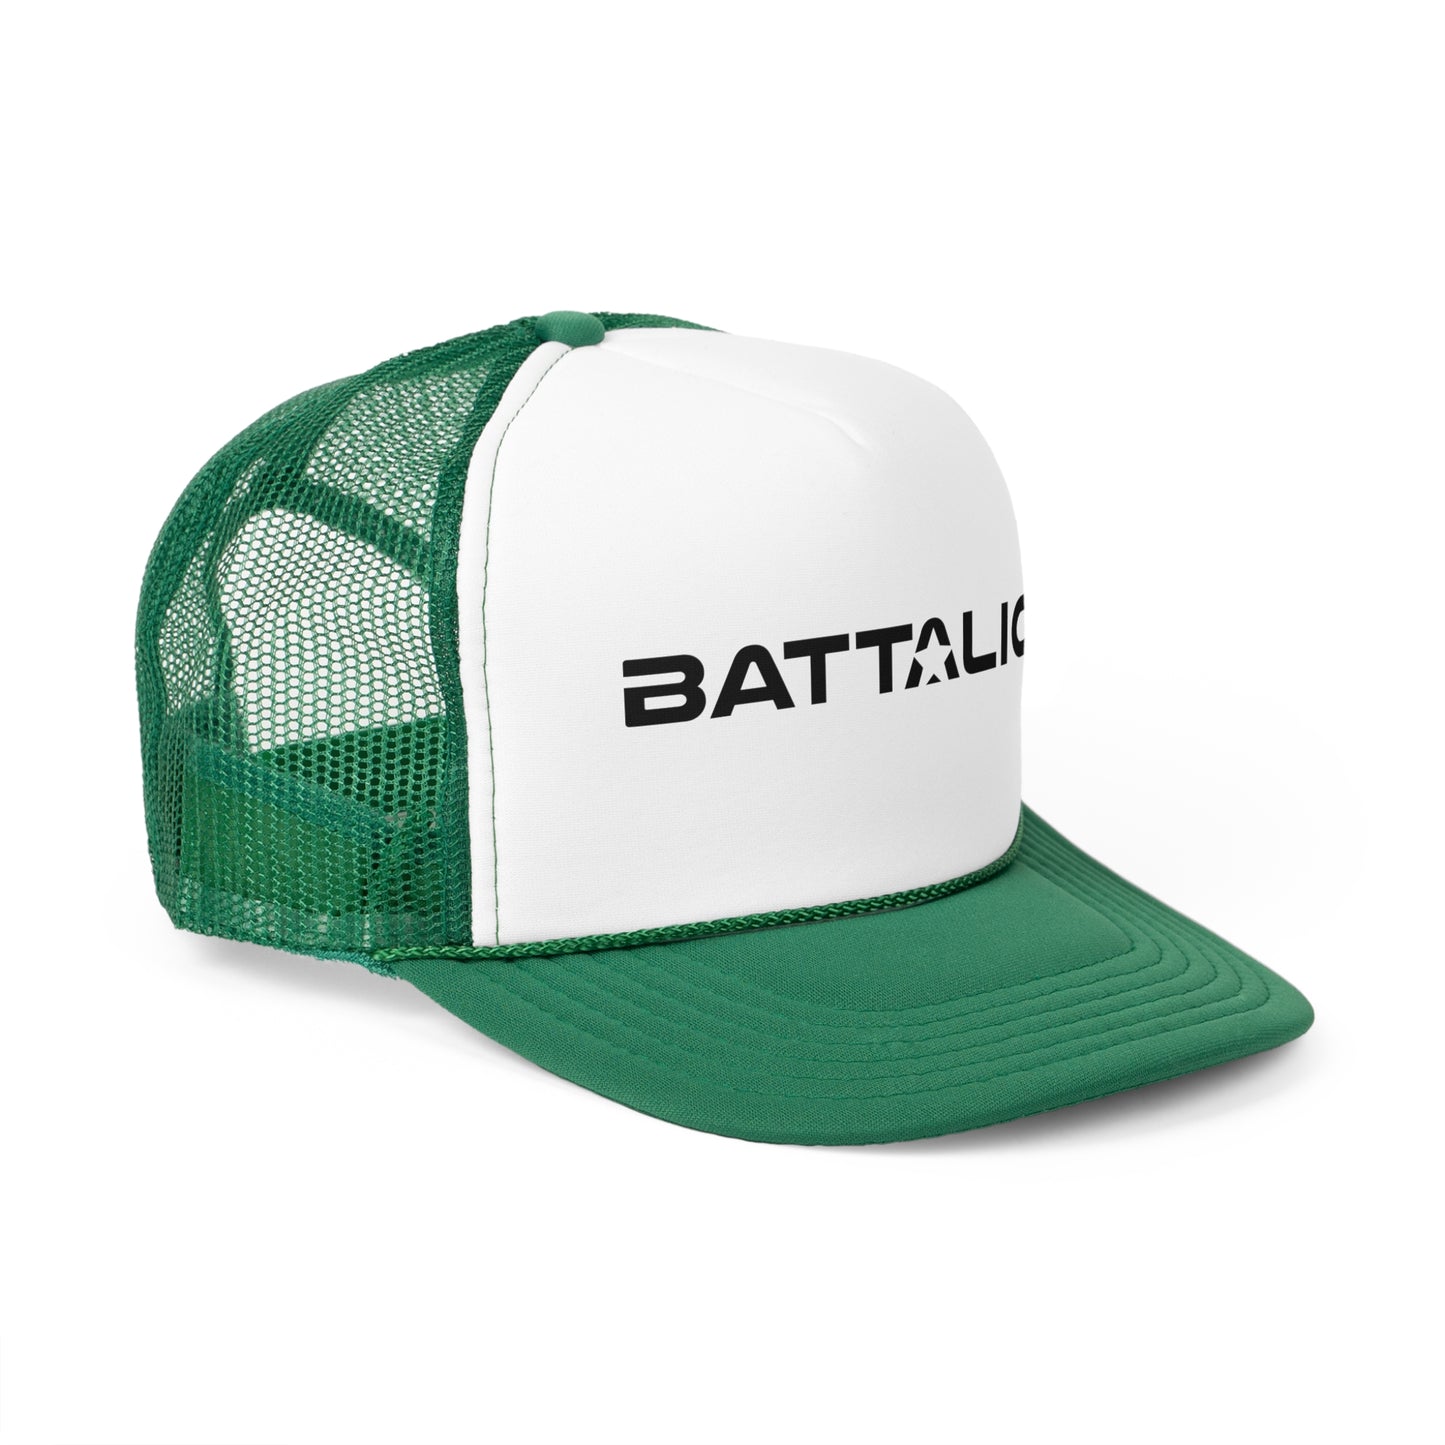 BATTALION - Trucker Caps